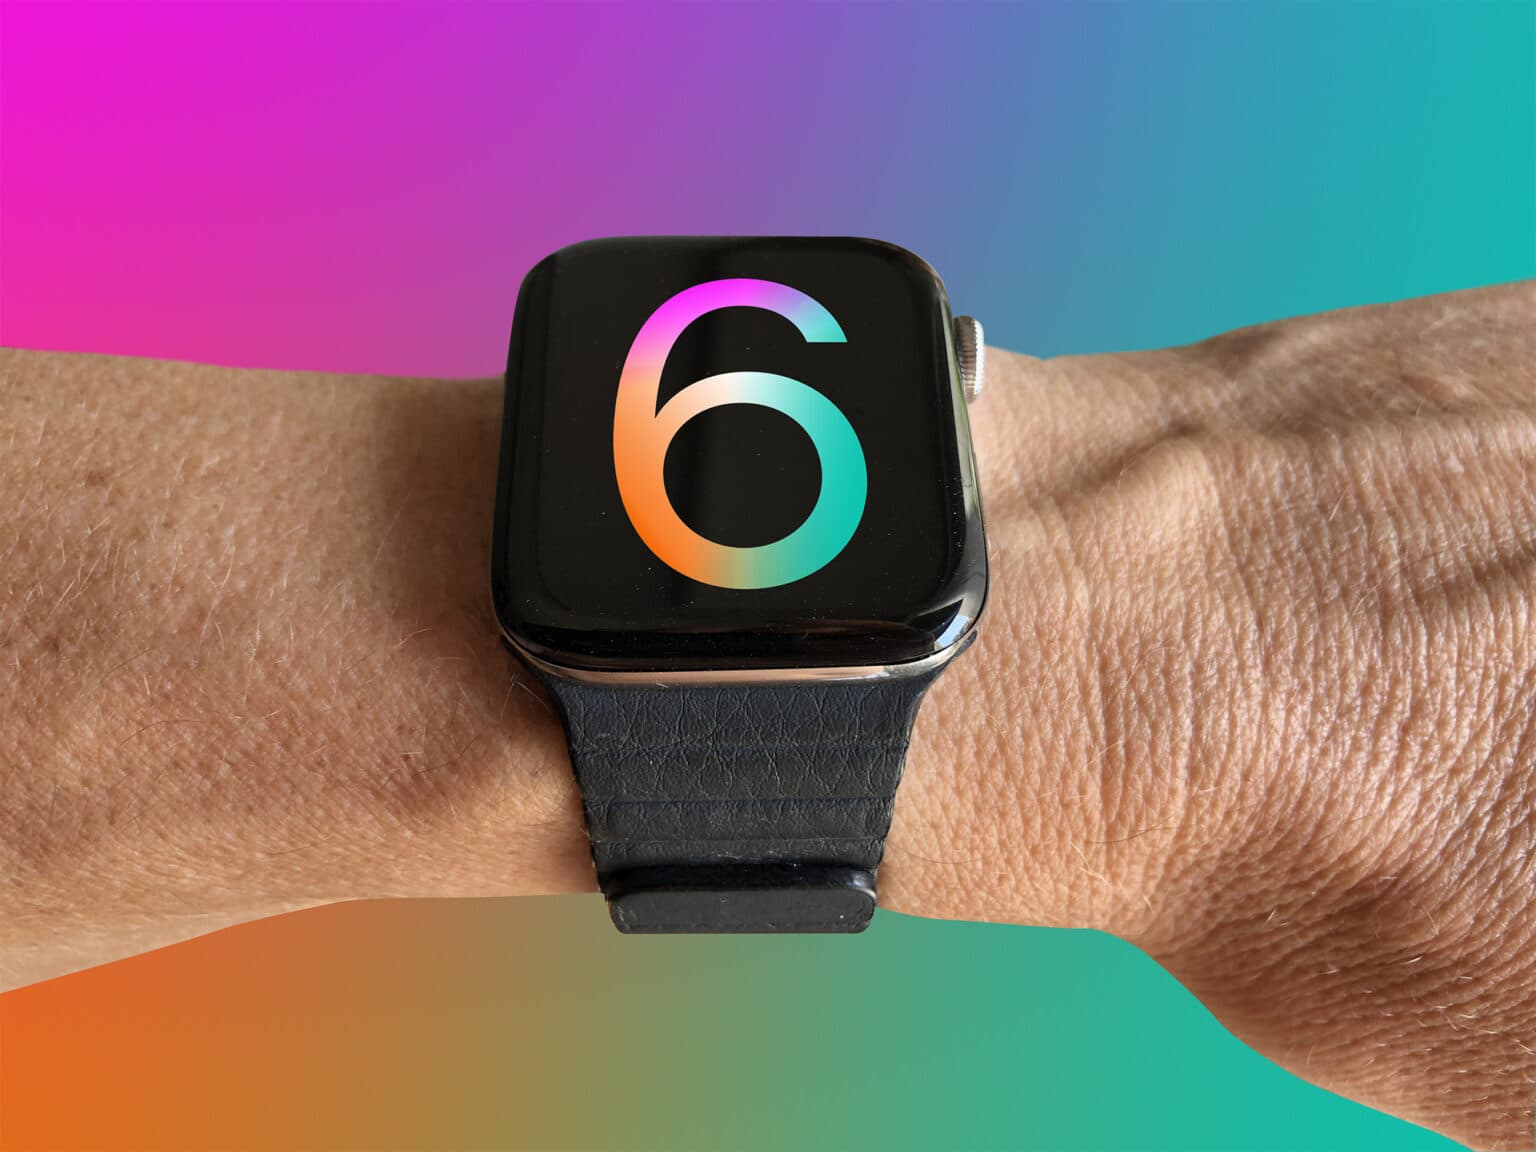 Will Apple Watch Series 6 get a svelte new look?